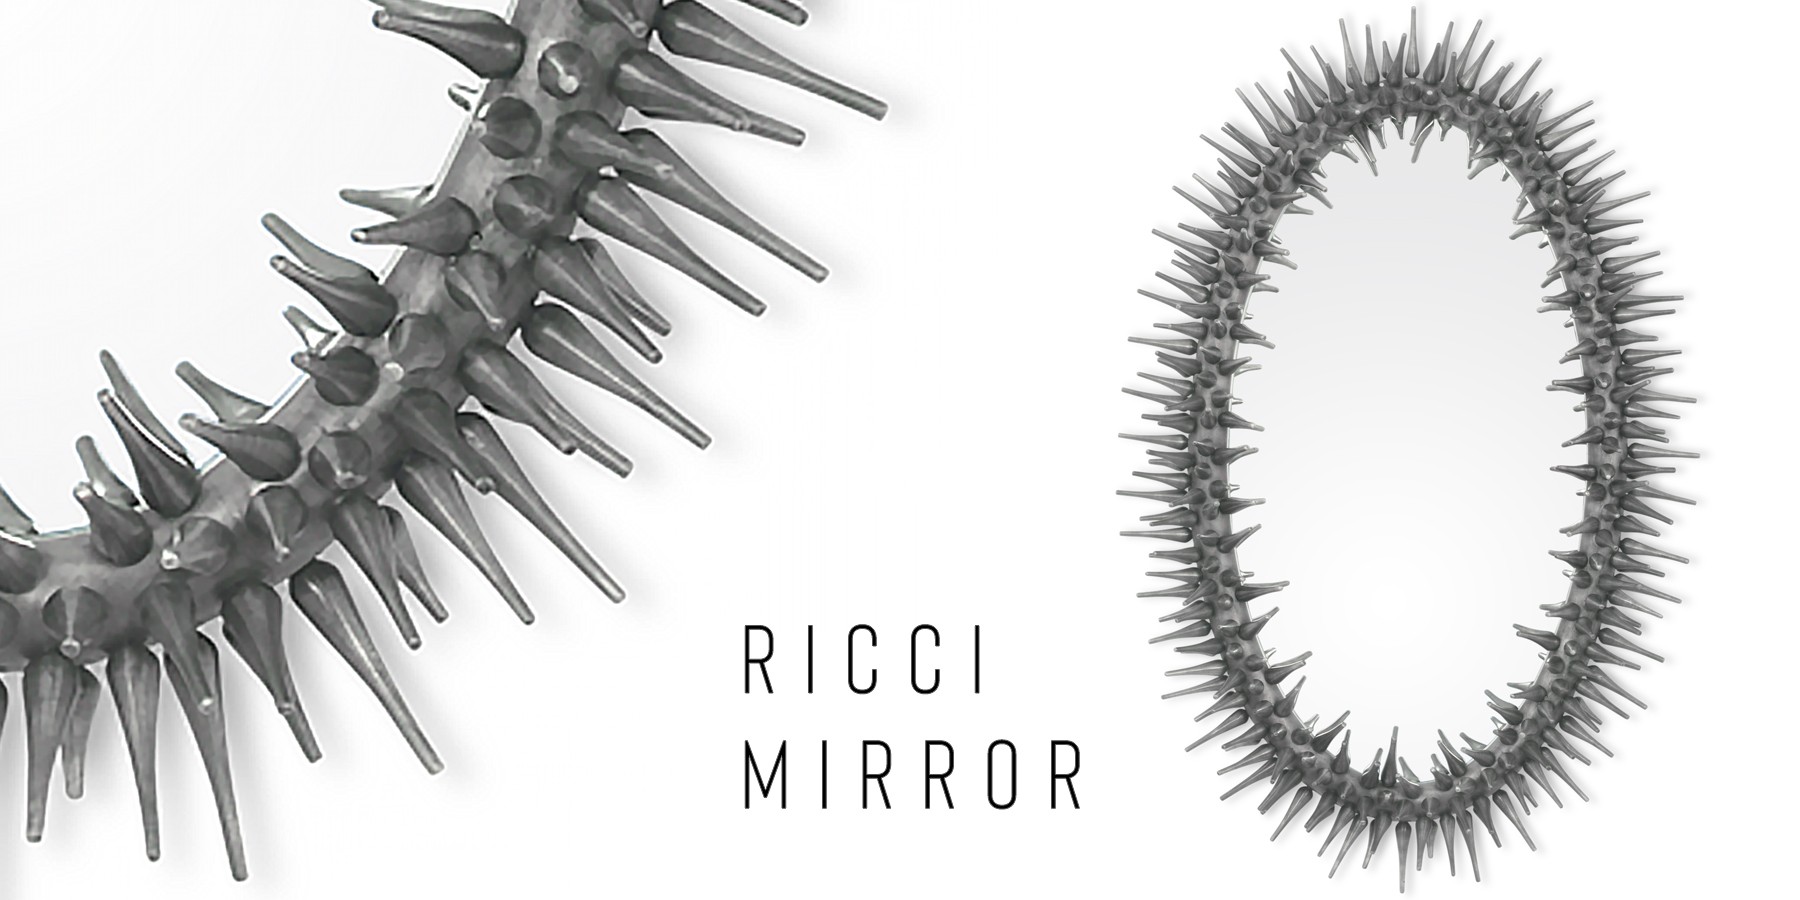 Ricci mirror